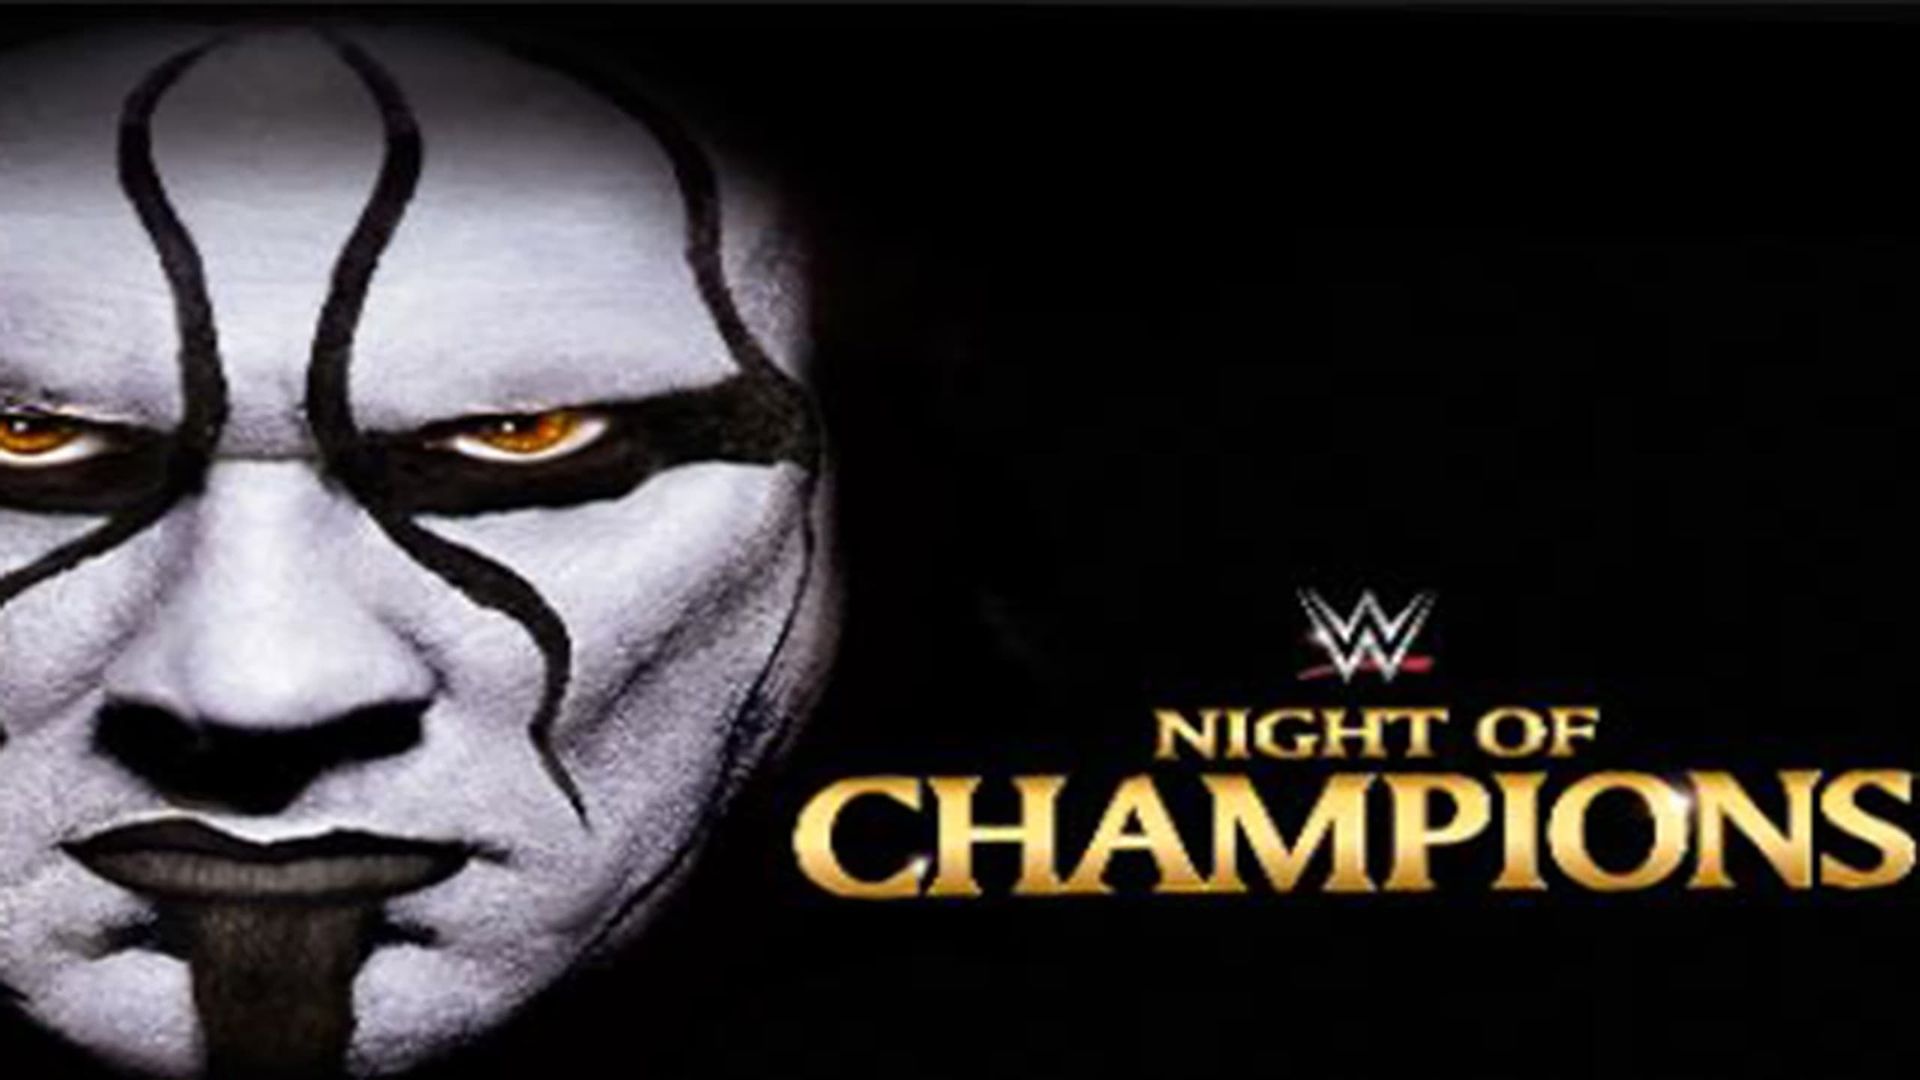 WWE Night of Champions background